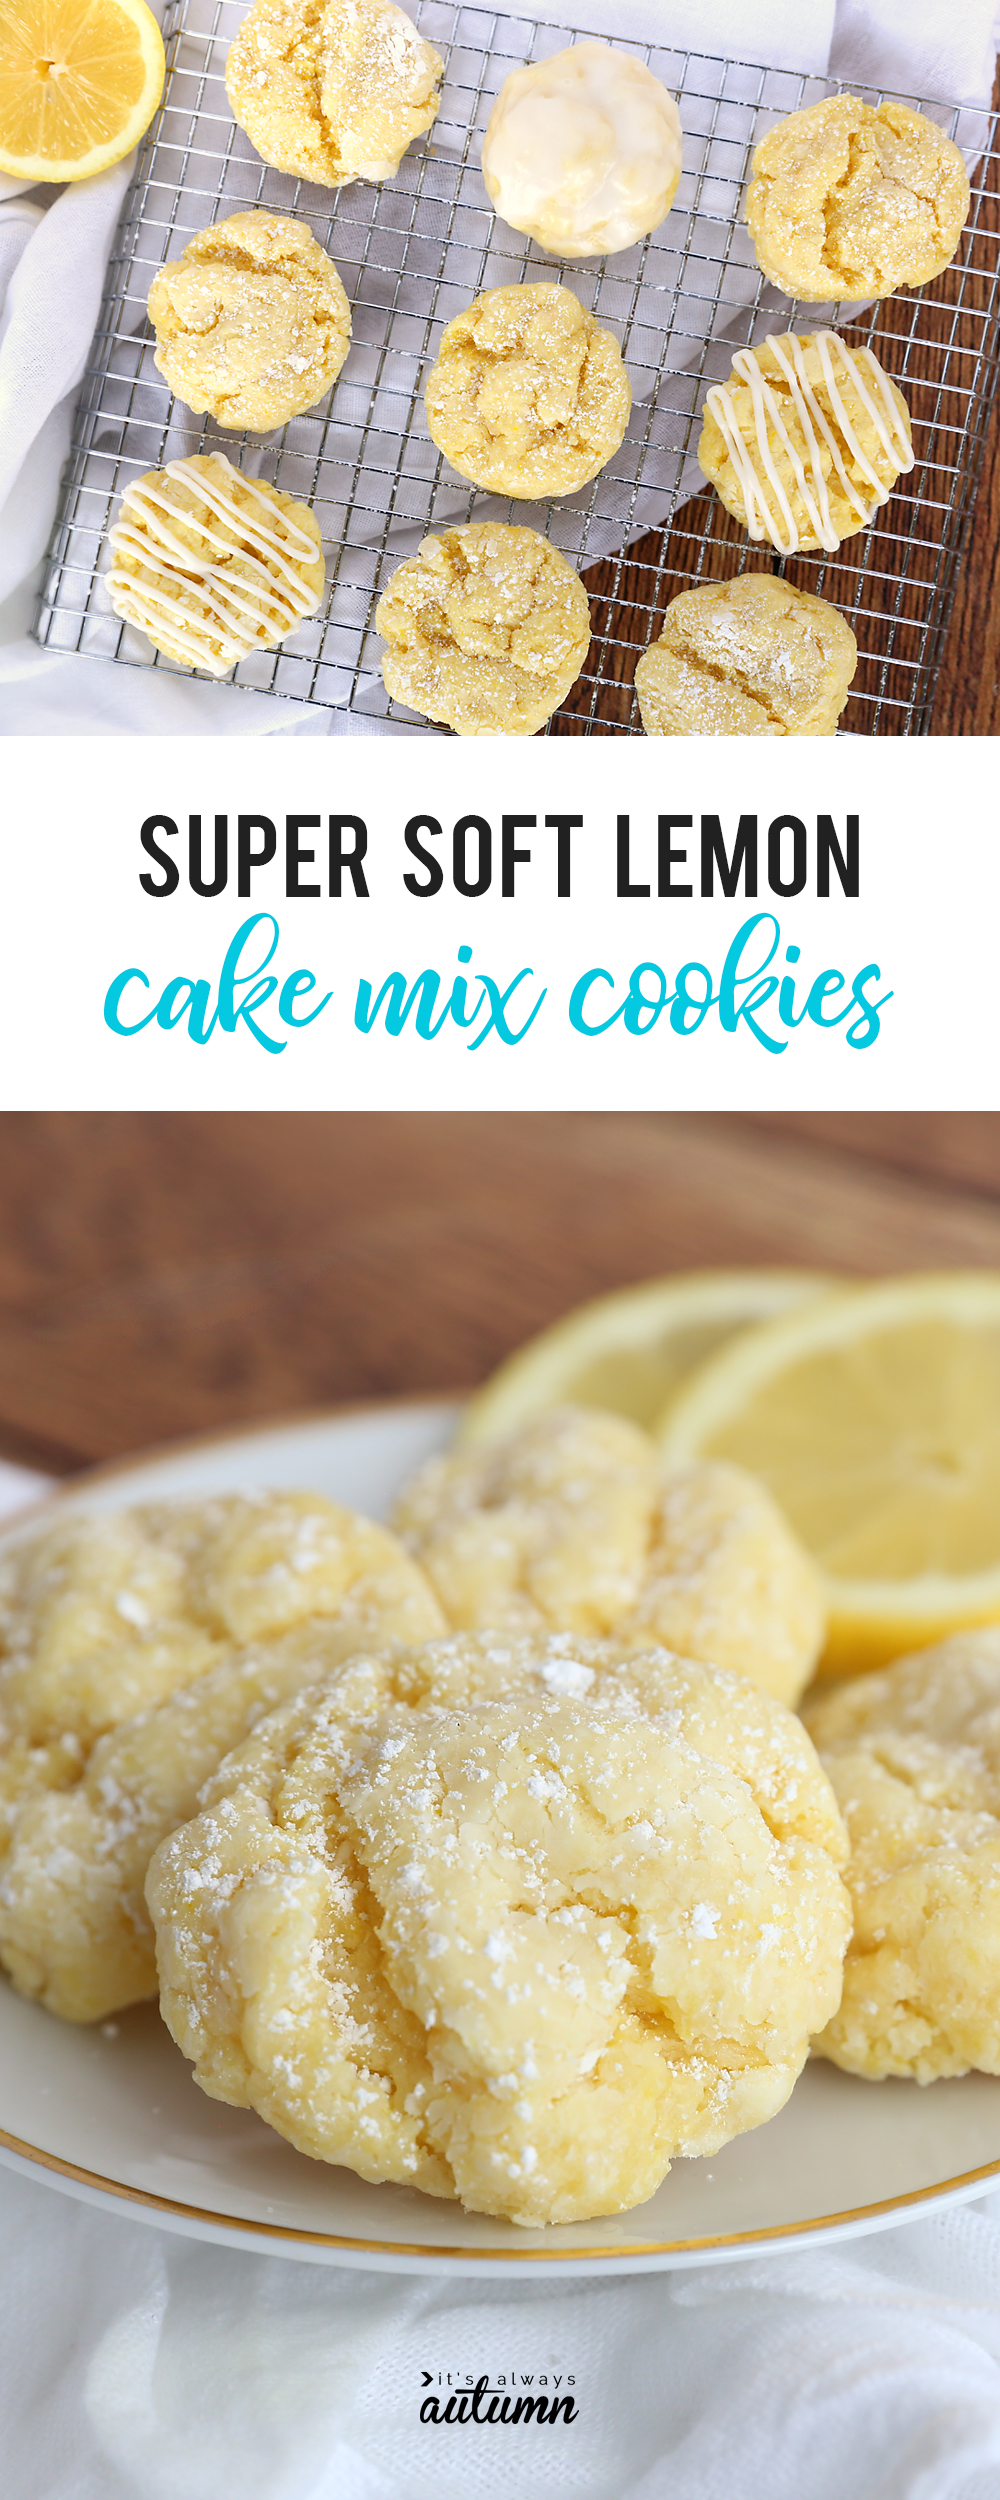 Super soft lemon cake mix cookies